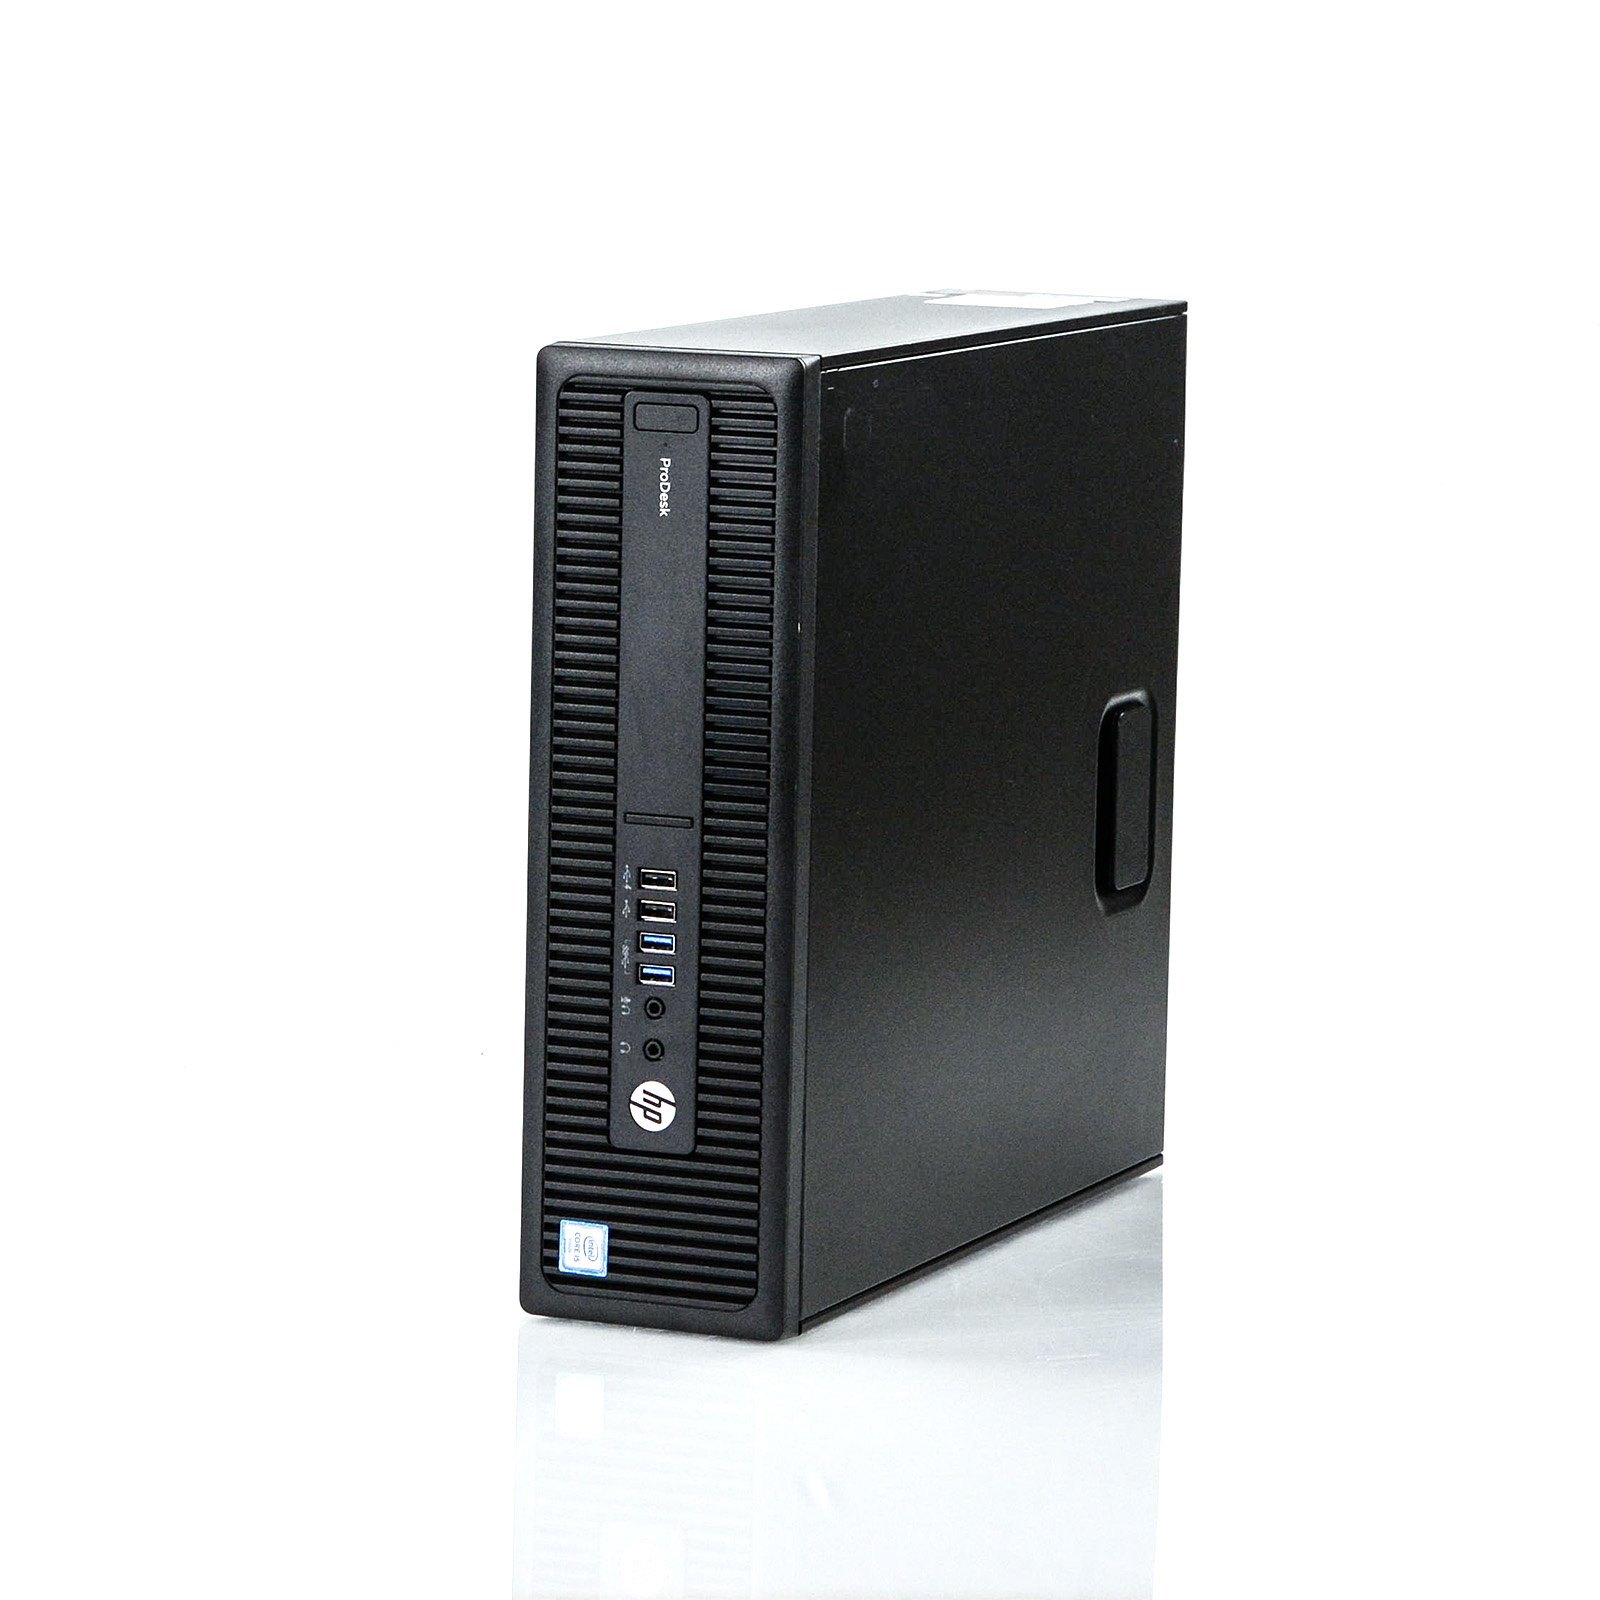 HP ProDesk 600 G2 SF Desktop Tower Computer, Intel Core i5, 8GB RAM, 256GB SSD, Windows 10 Pro, Black (Used) - image 1 of 6